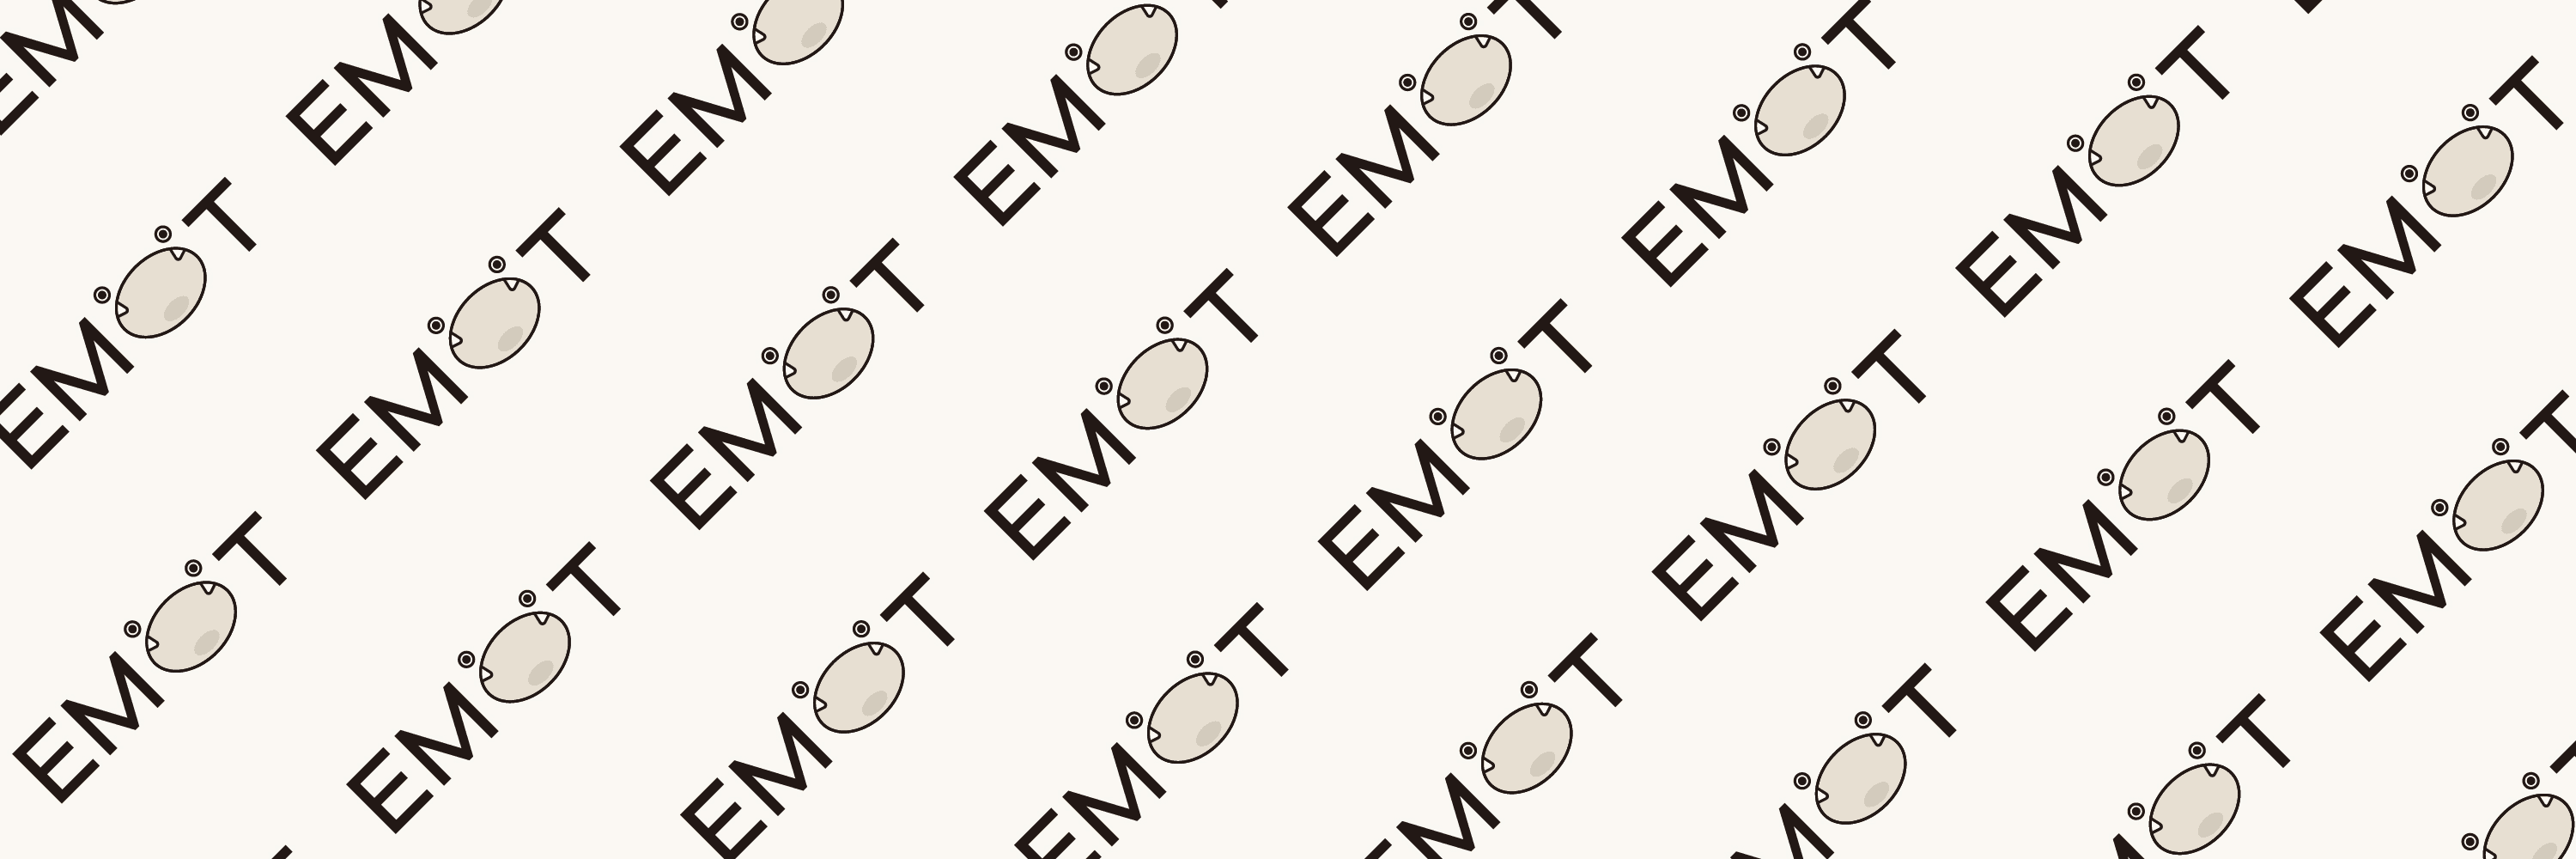 EMOT_nft banner